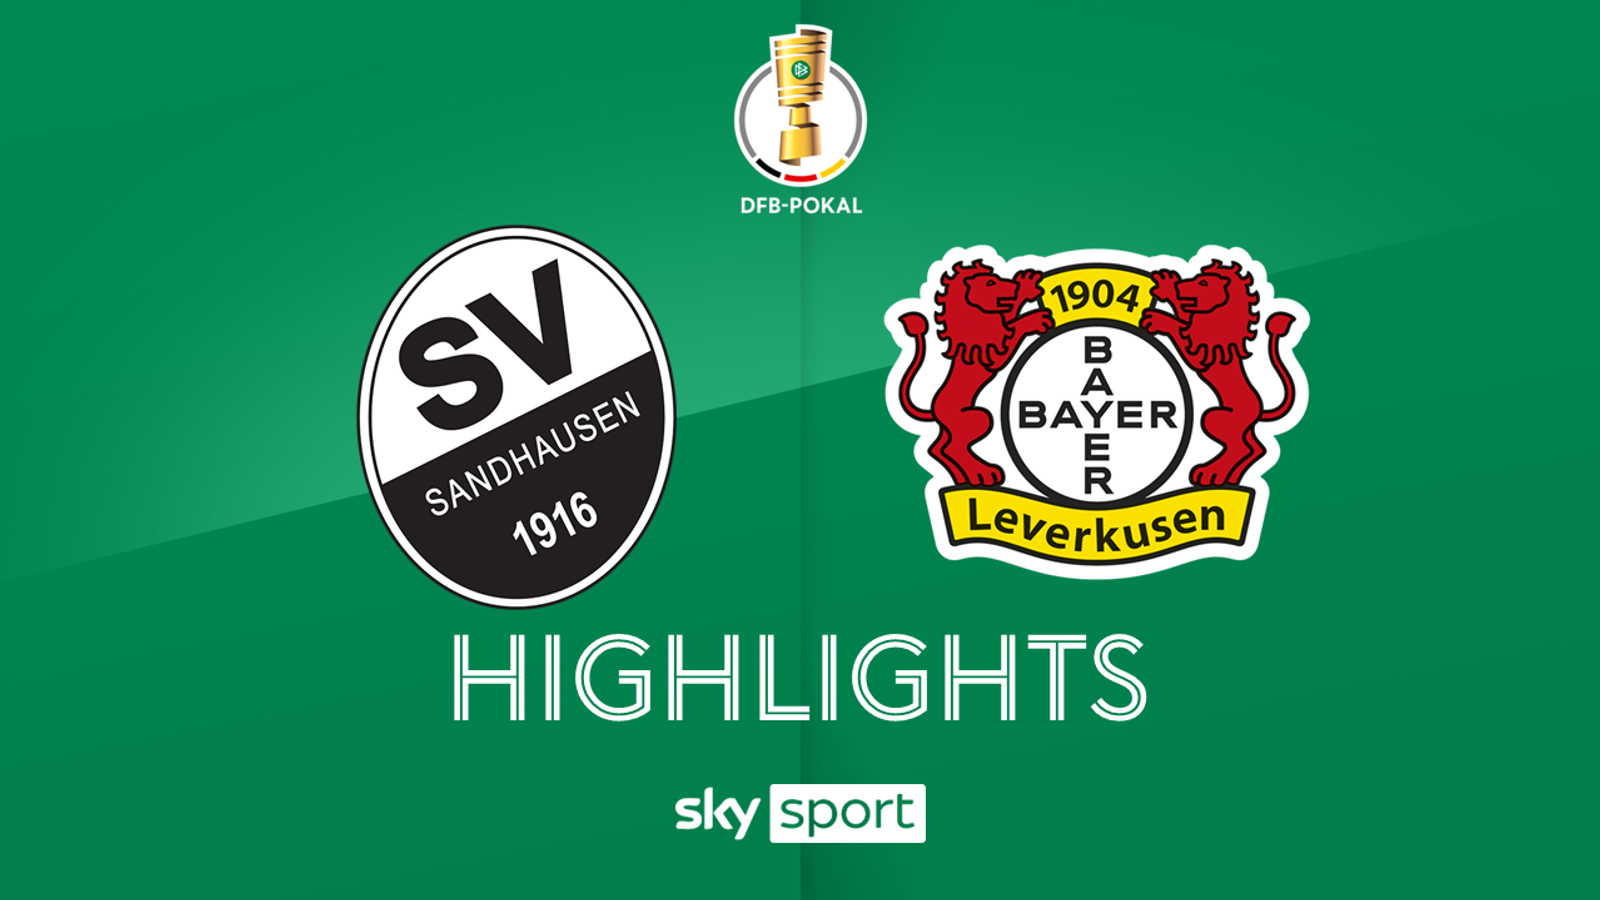 DFB-Pokal SV Sandhausen - Bayer Leverkusen